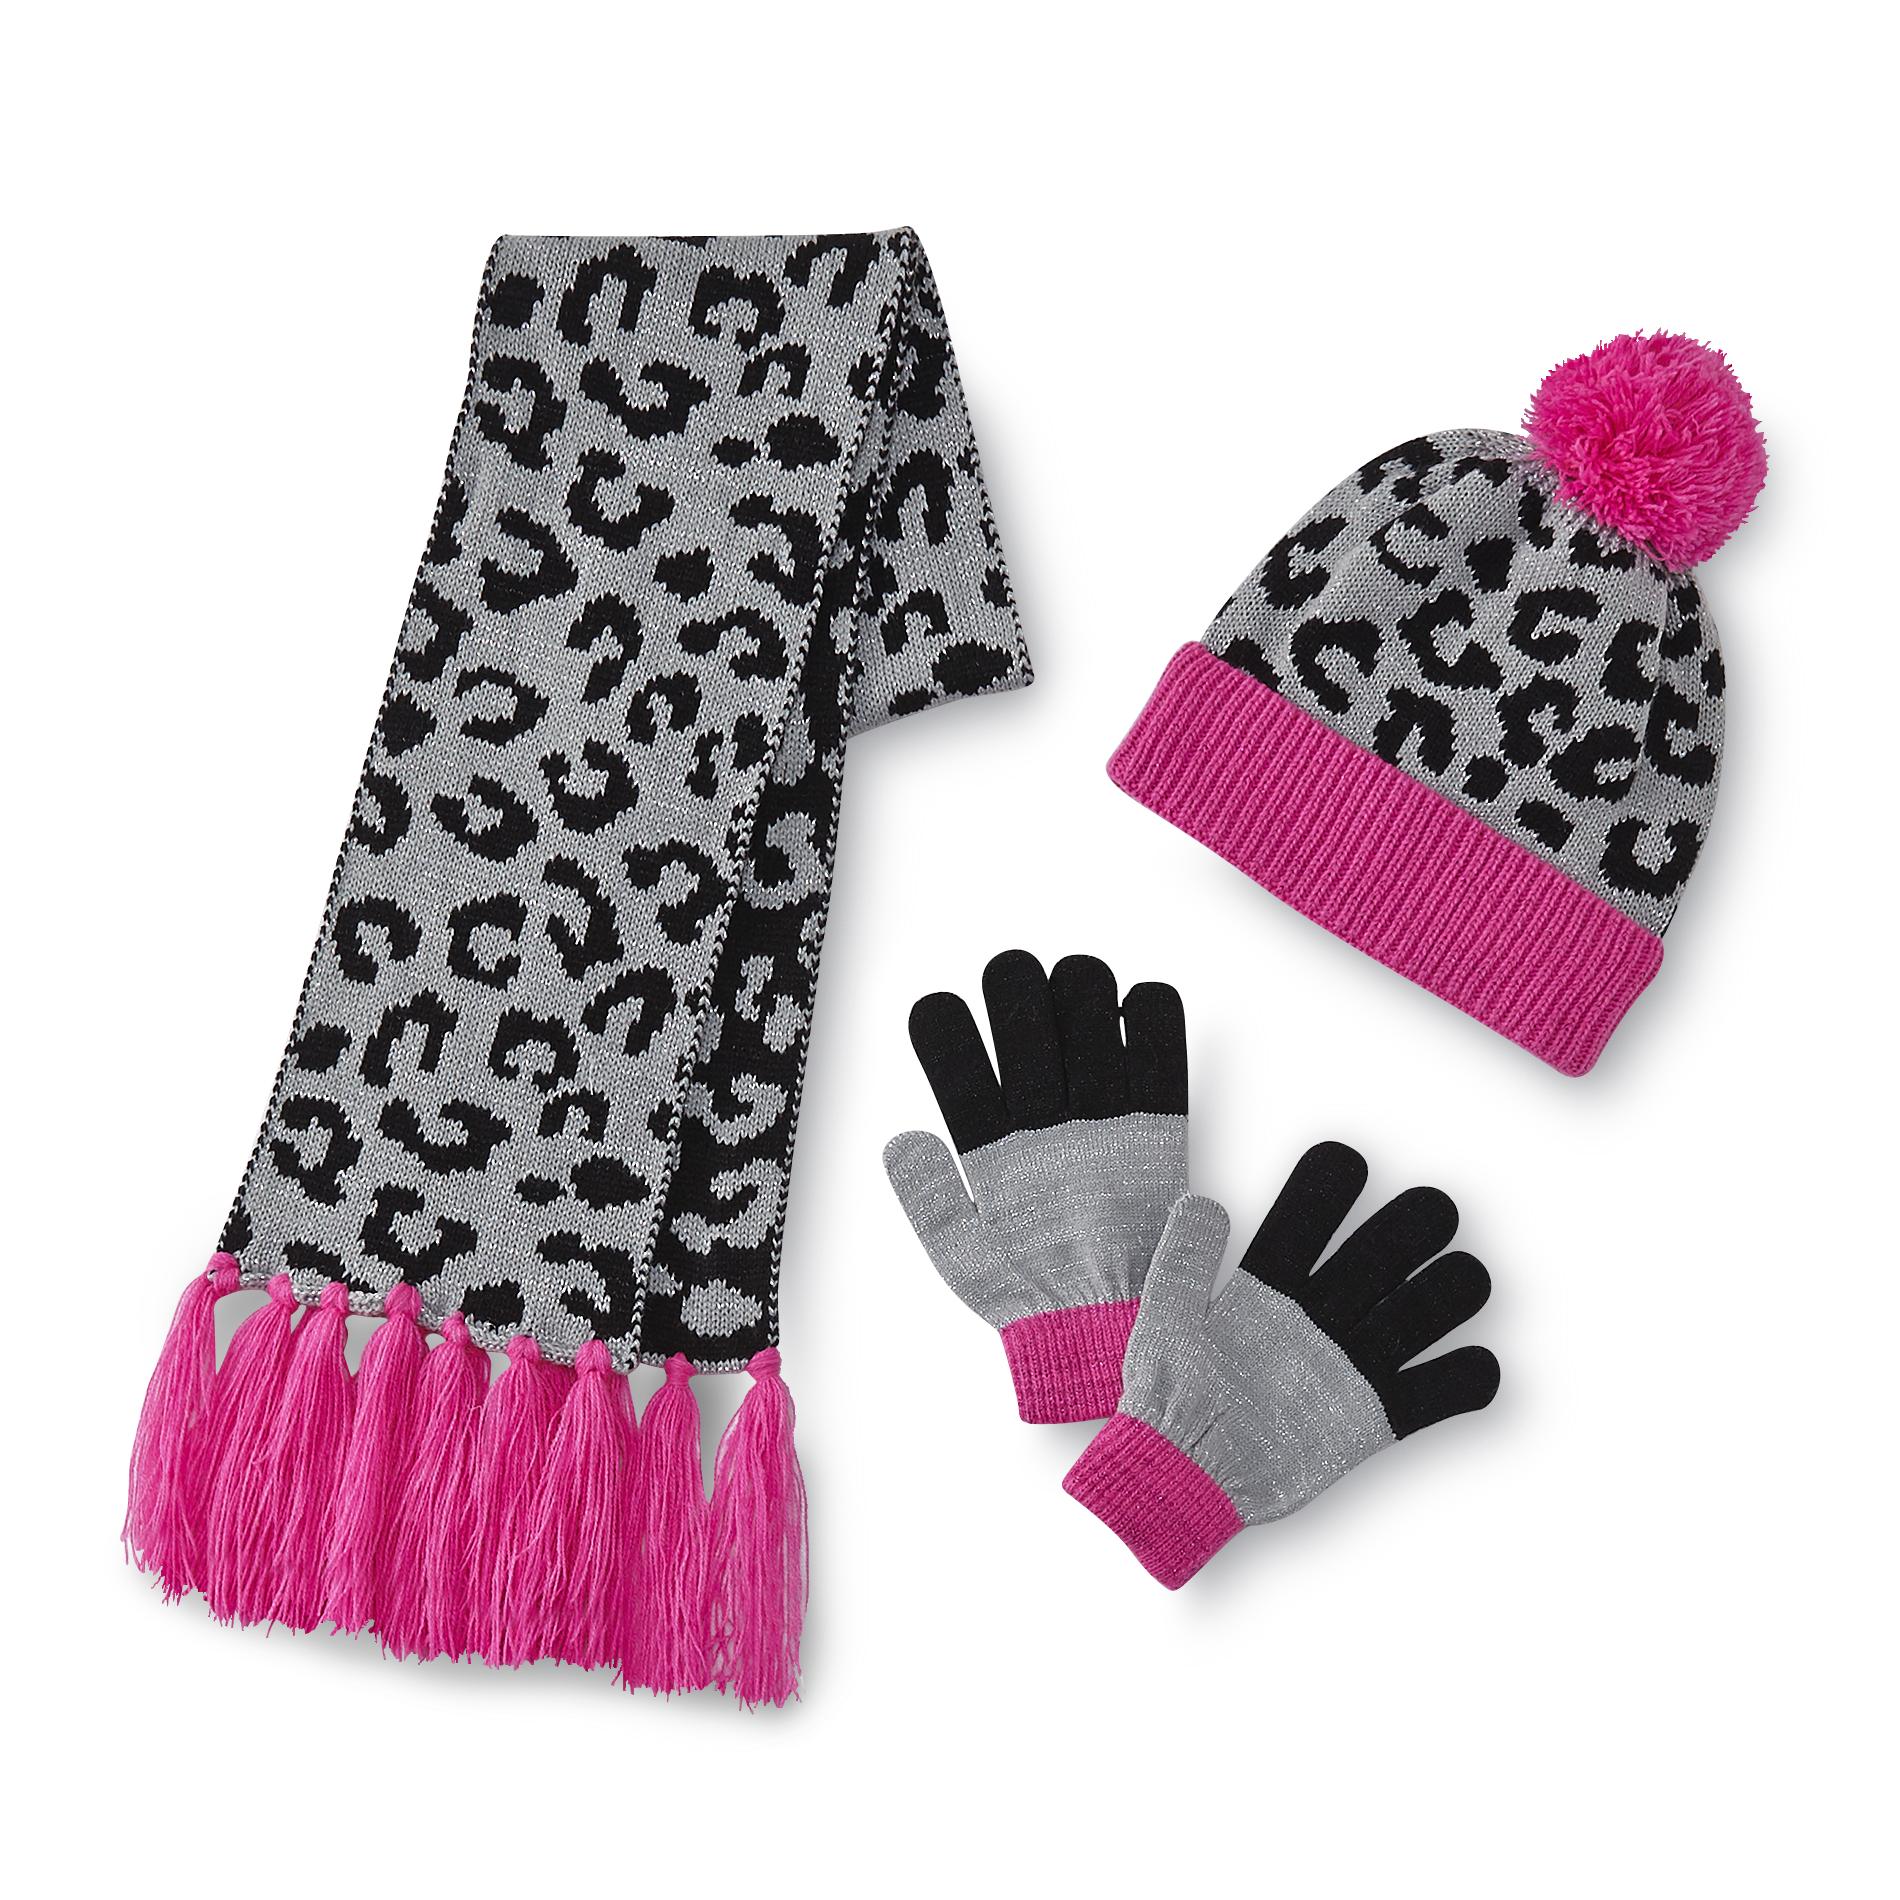 Toby Girl's Scarf, Gloves & Hat - Leopard